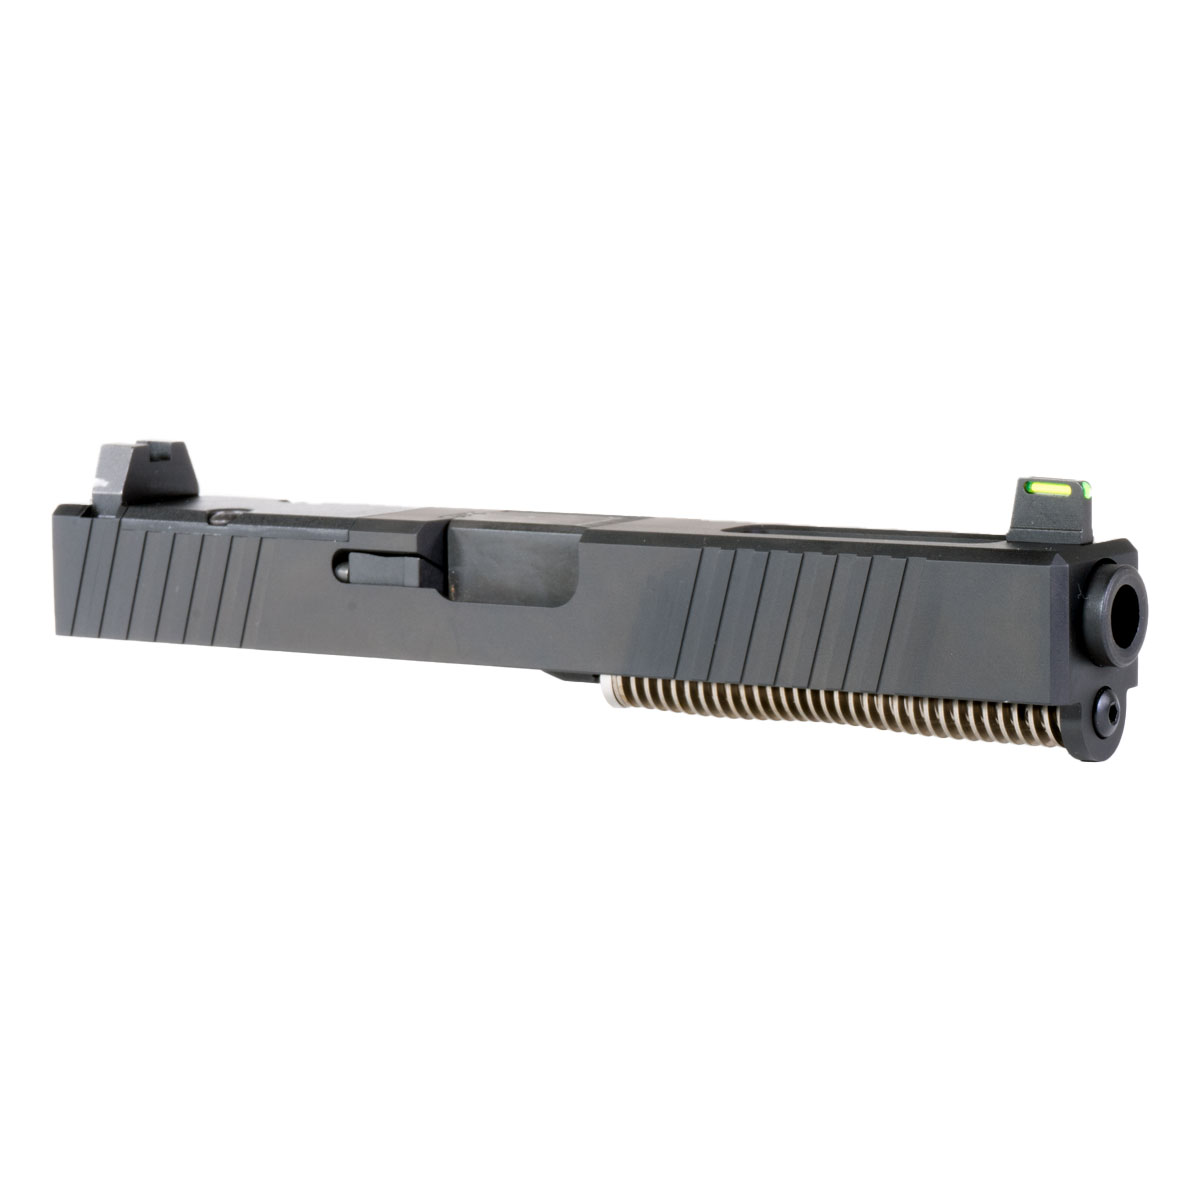 MMC 'Hornwright' 9mm Complete Slide Kit - Glock 17 Gen 1-3 Compatible